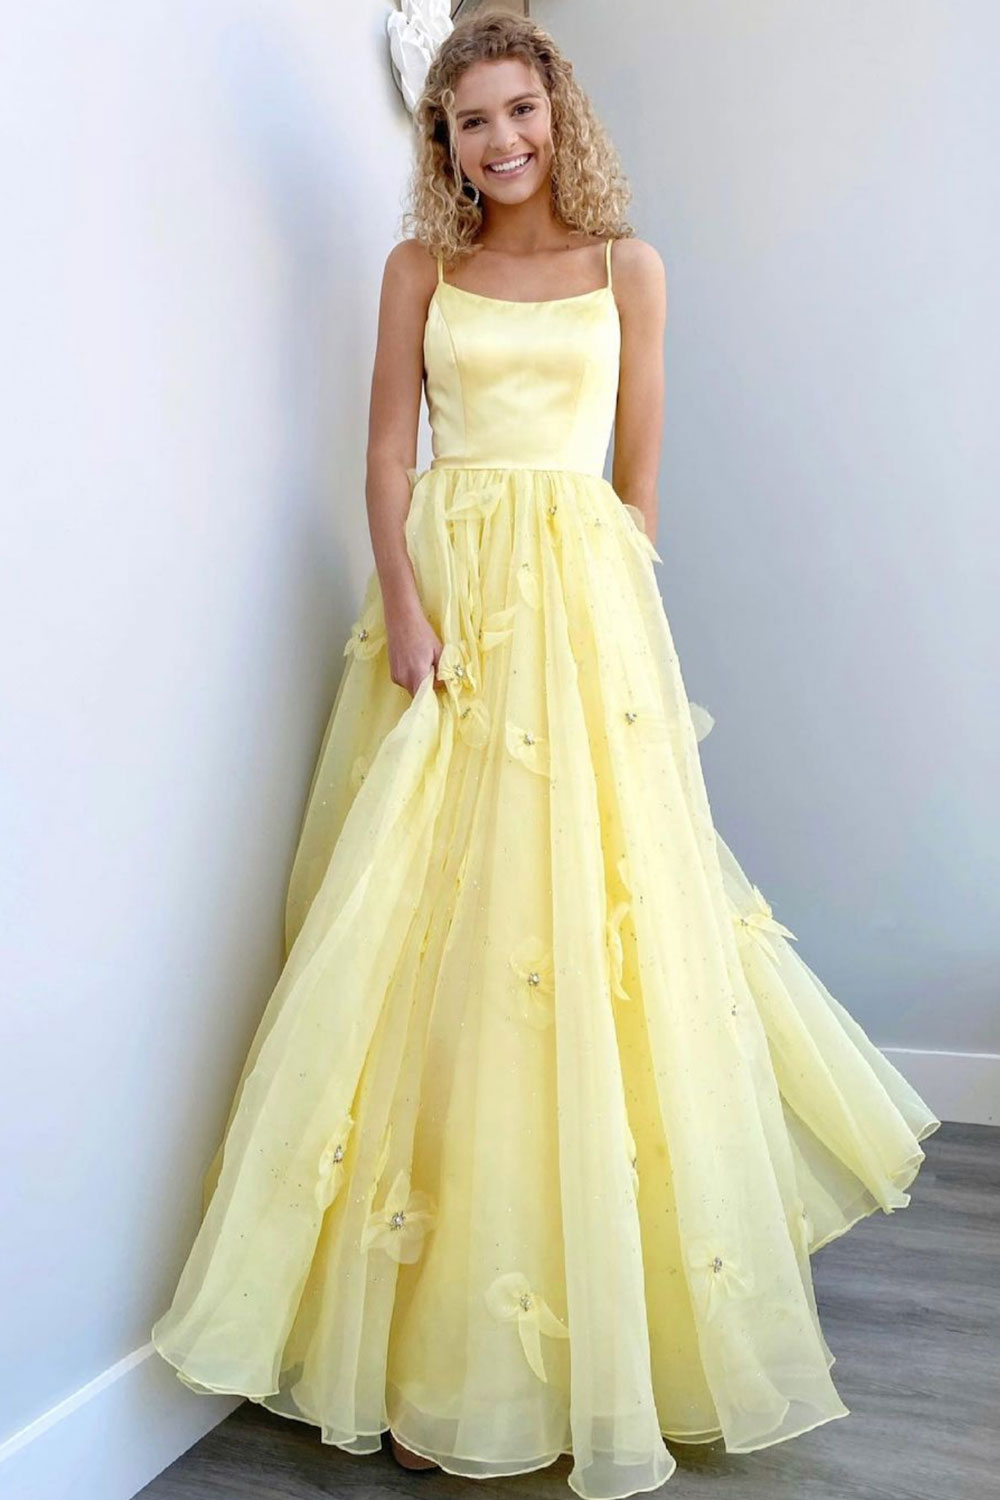 dress prom yellow